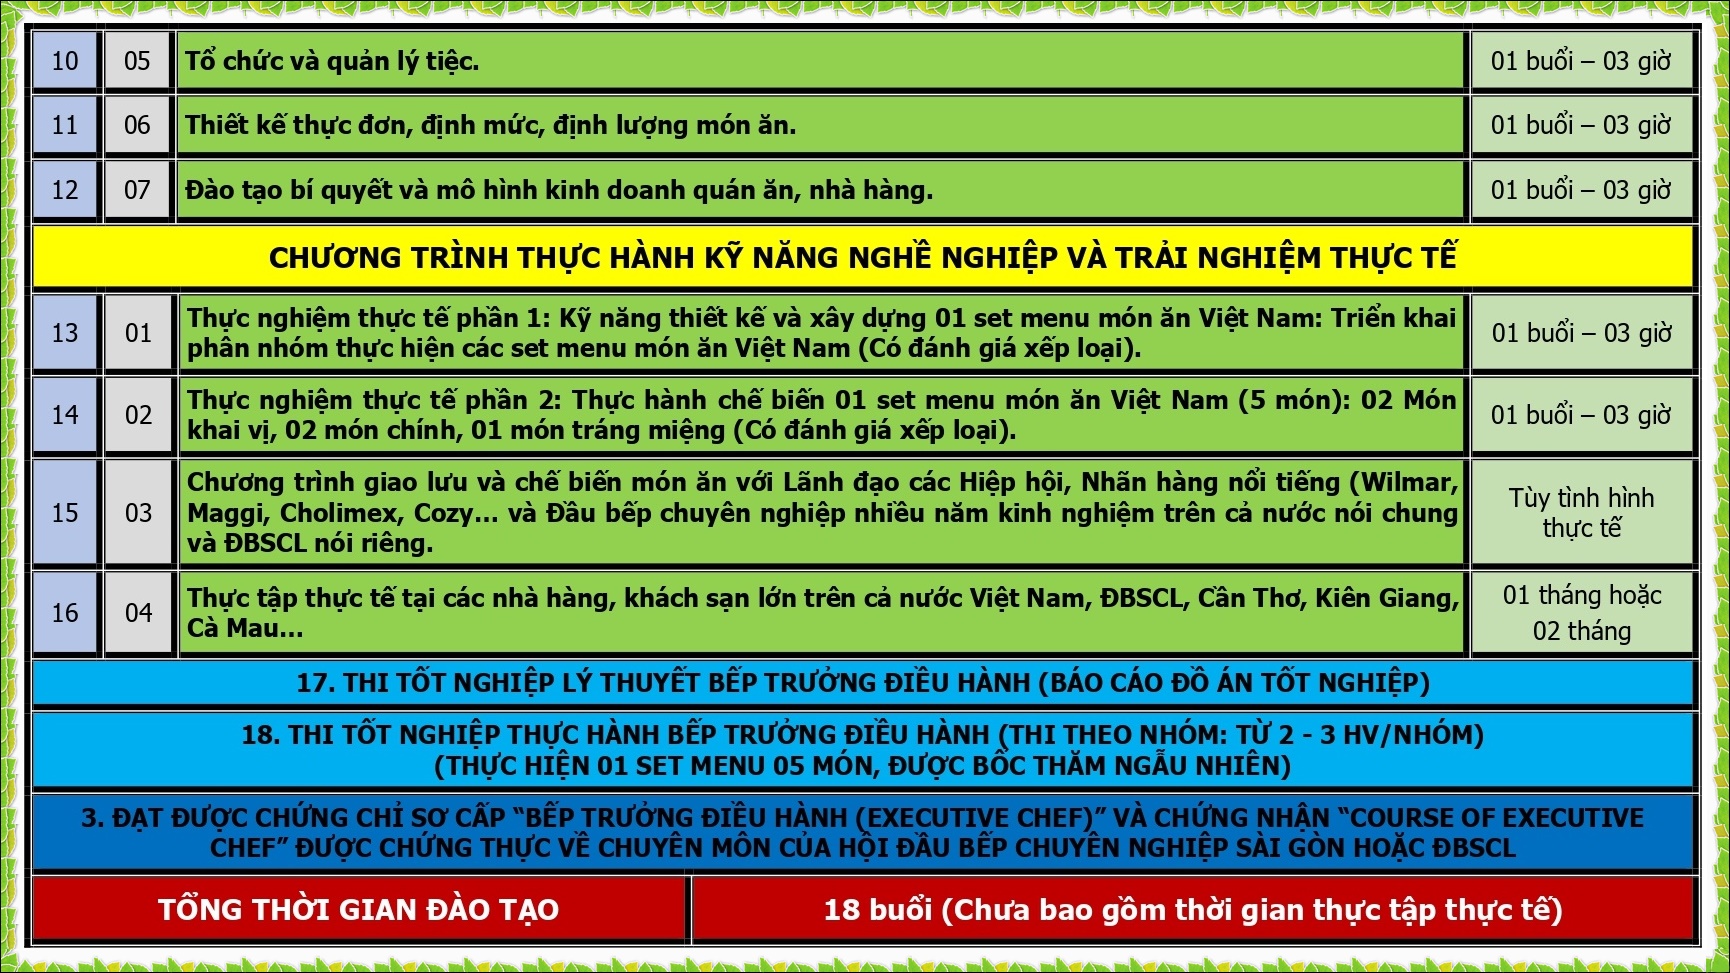 NGHIEP VU BEP TRUONG DIEU HANH_page-0002